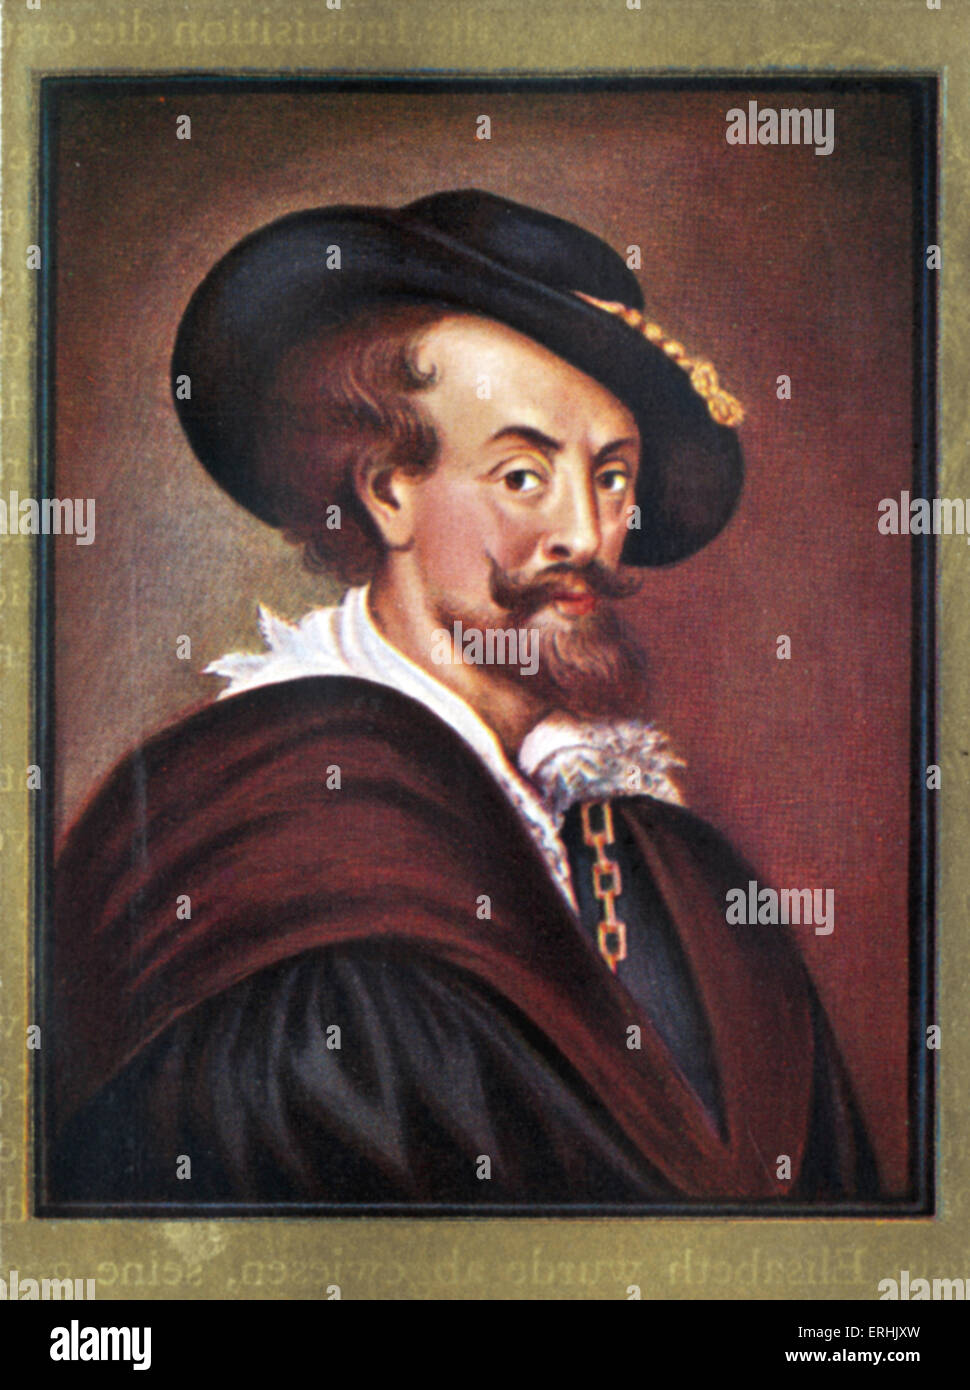 Peter Paul Rubens. Retrato del pintor flamenco. Junio 28, 1577 - Mayo 30, 1640 Foto de stock